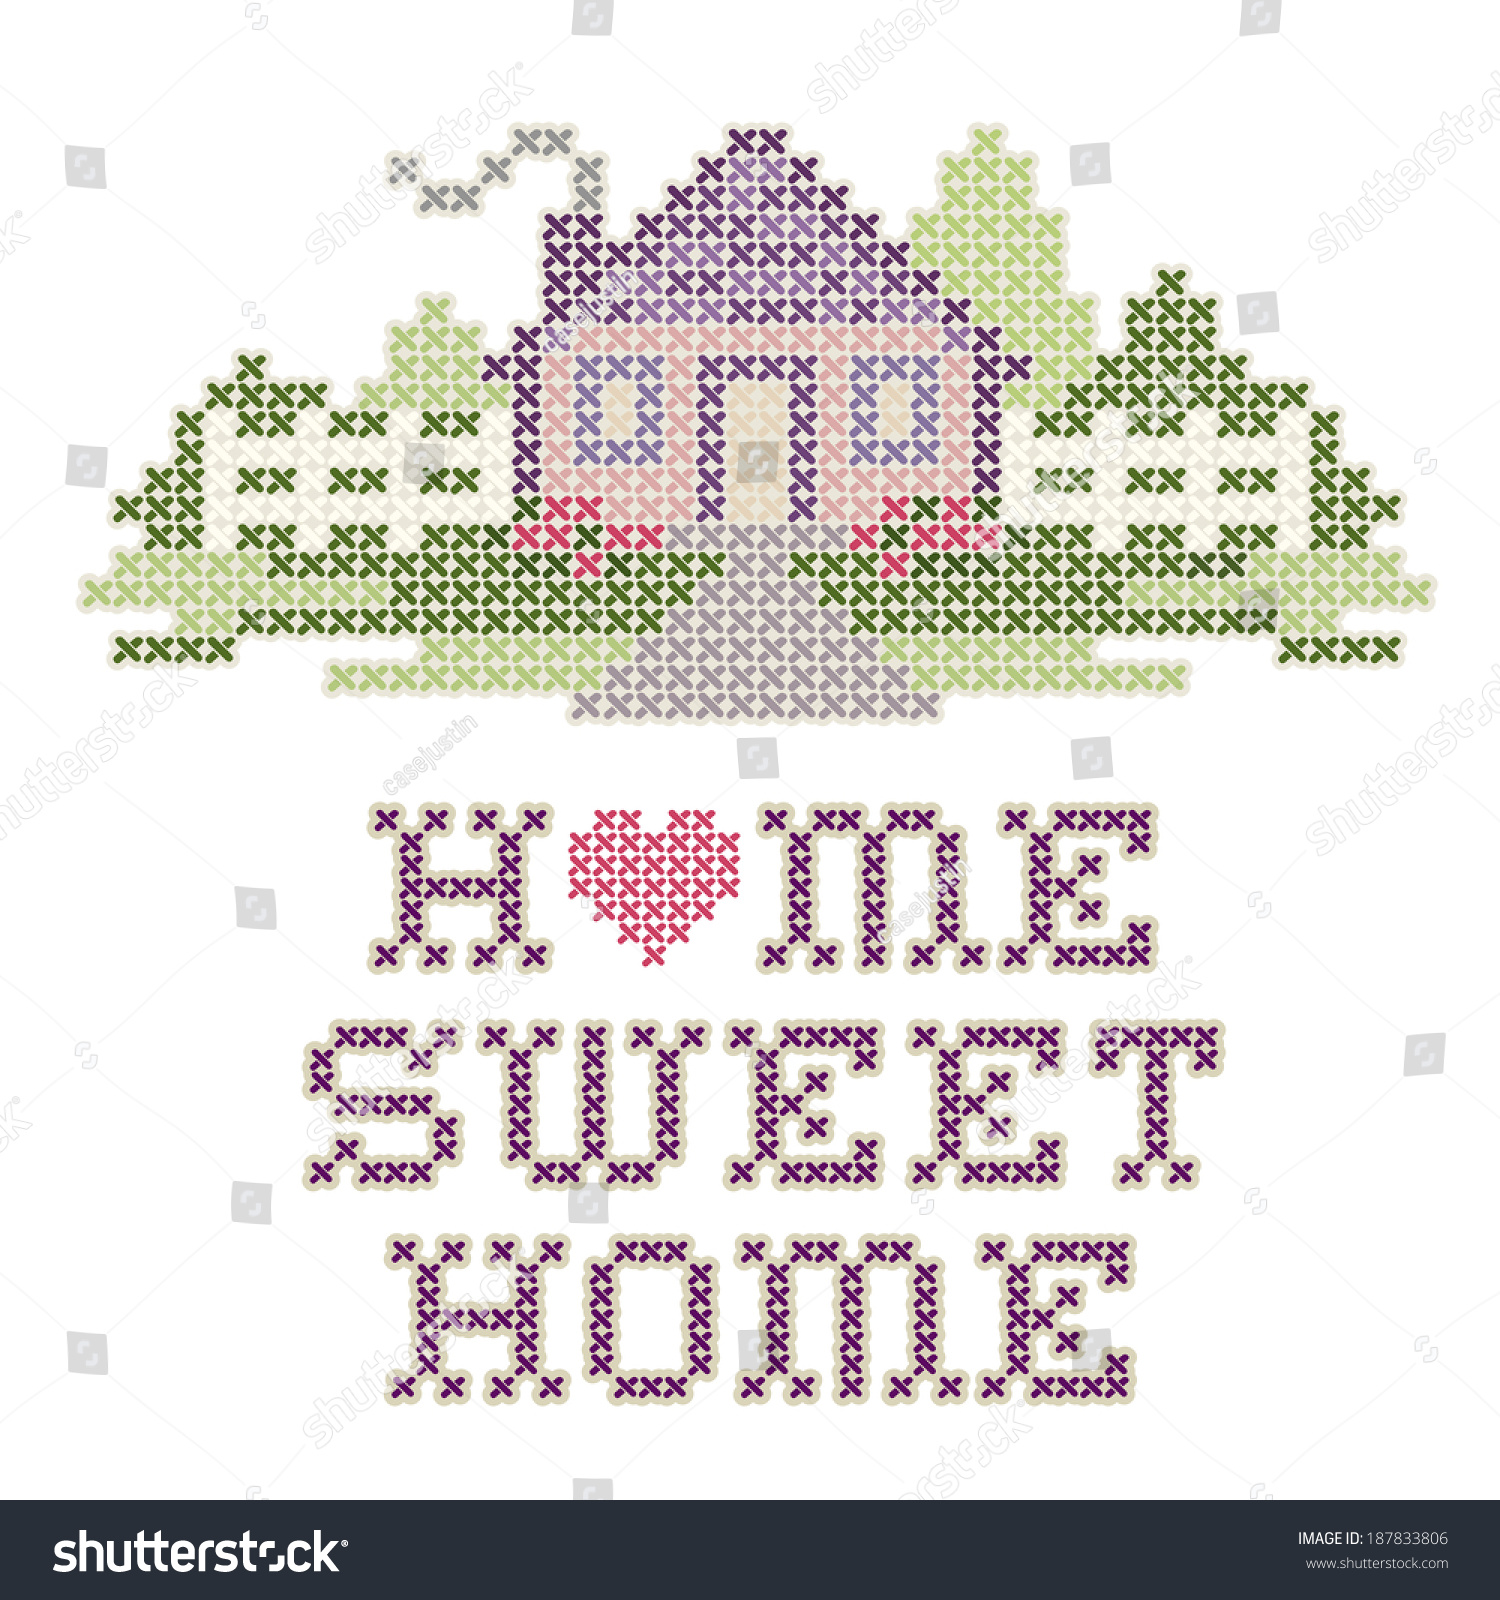 Home Sweet Home Embroidery Cross Stitch Pattern Royalty Free Stock Photo Avopix Com